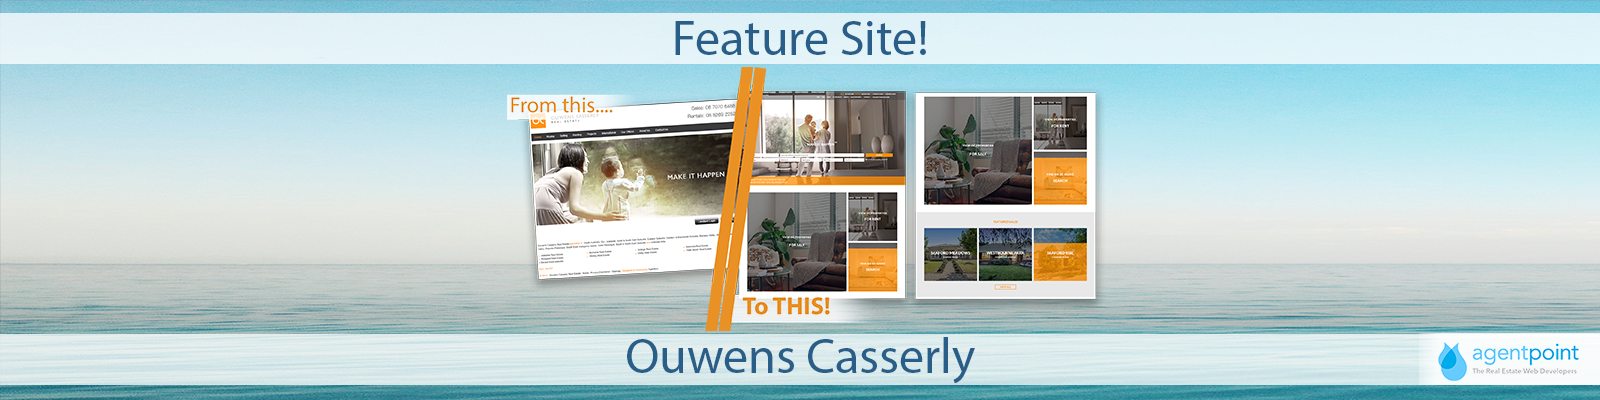 feature site ouwens casserly header